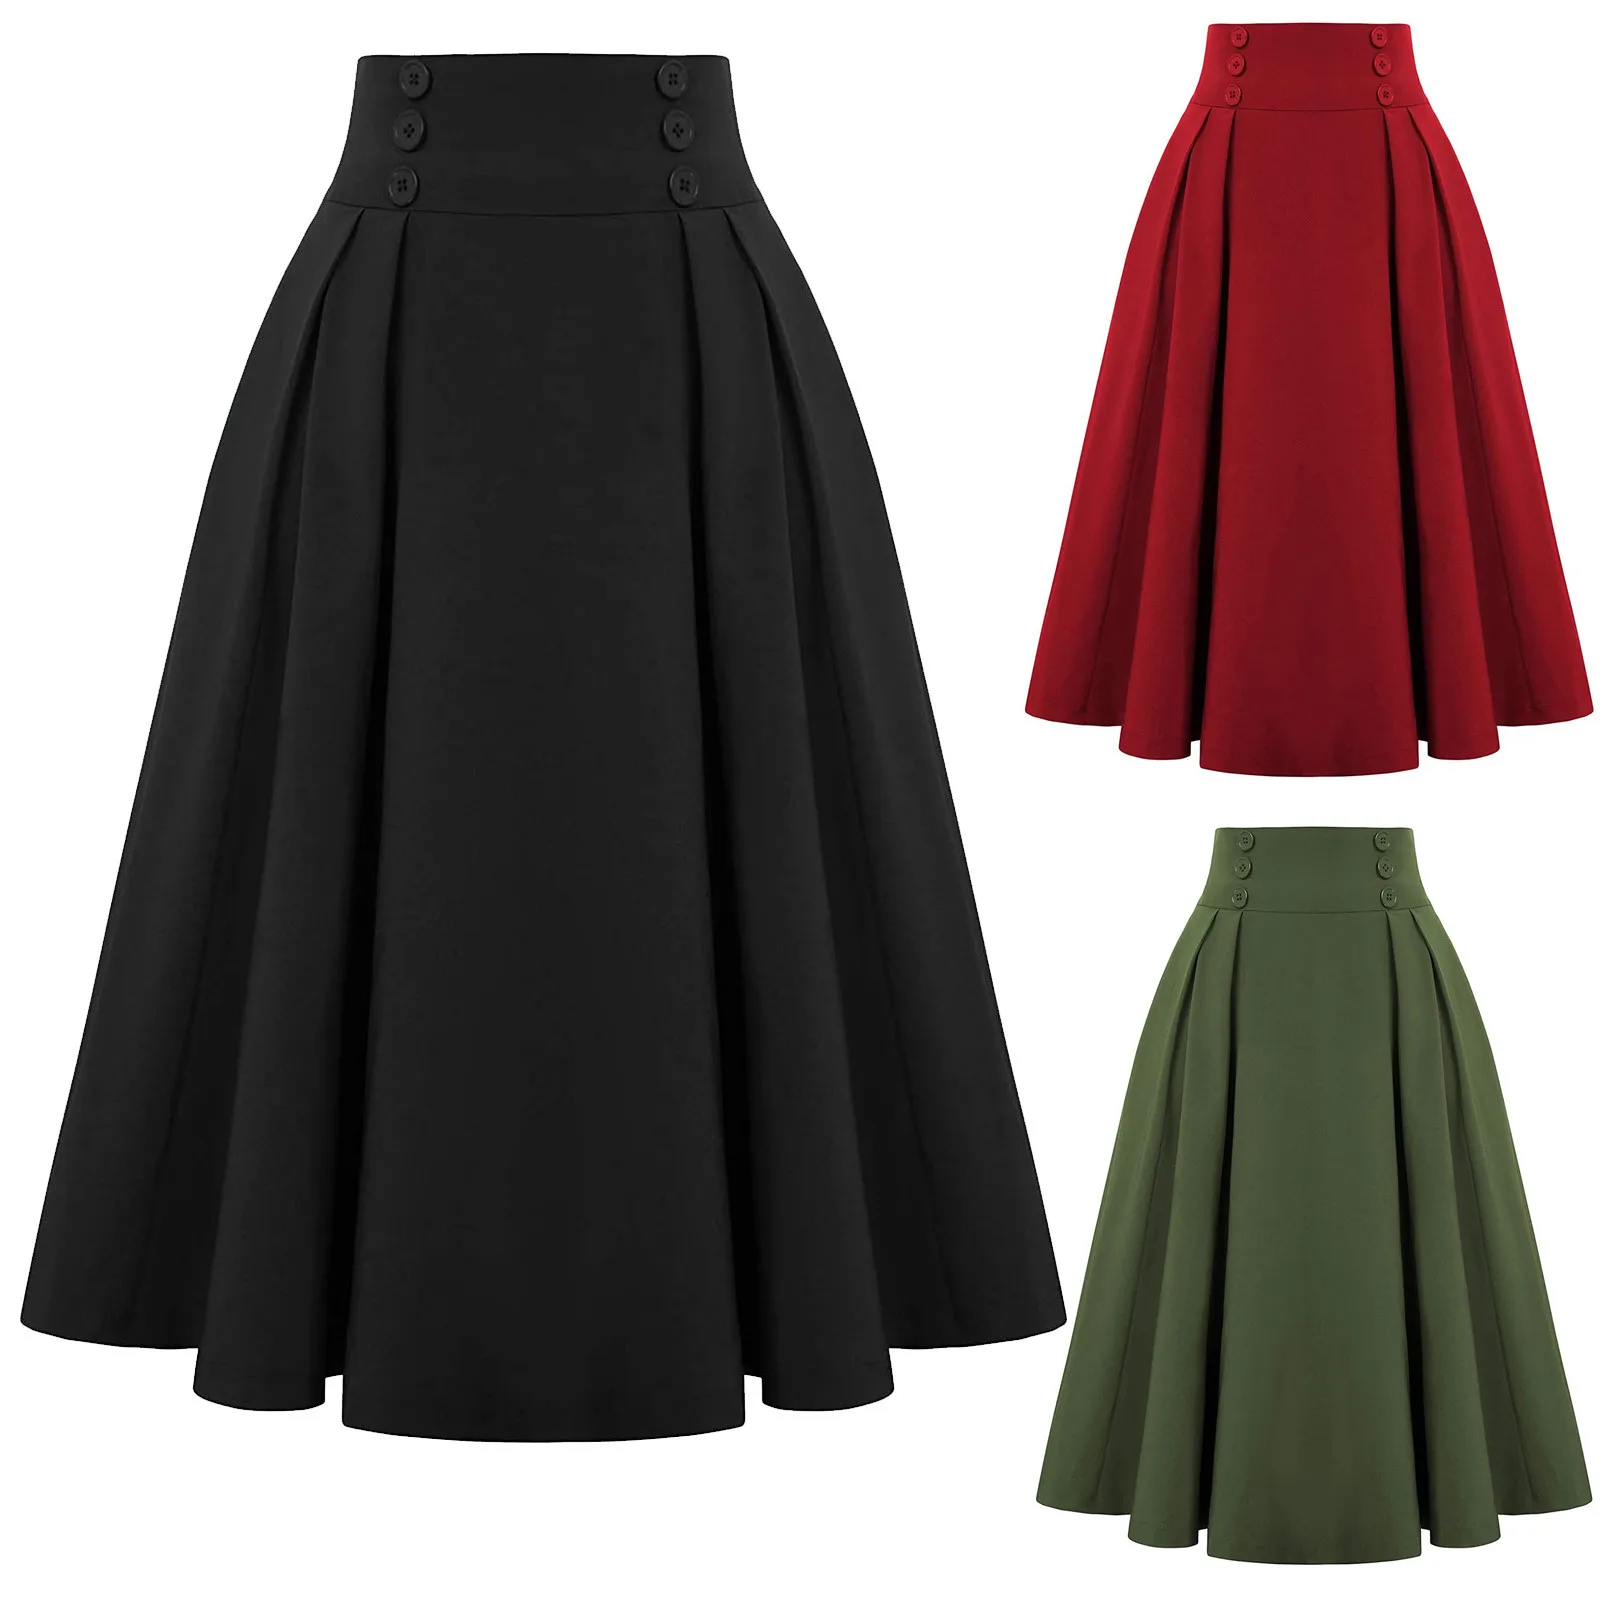 Women High Waist Skirt 2021 Vintage Style Elastic Ladies A Line Fashion Pleated Skirt With Pocket Harajuku Solid Color Skirt